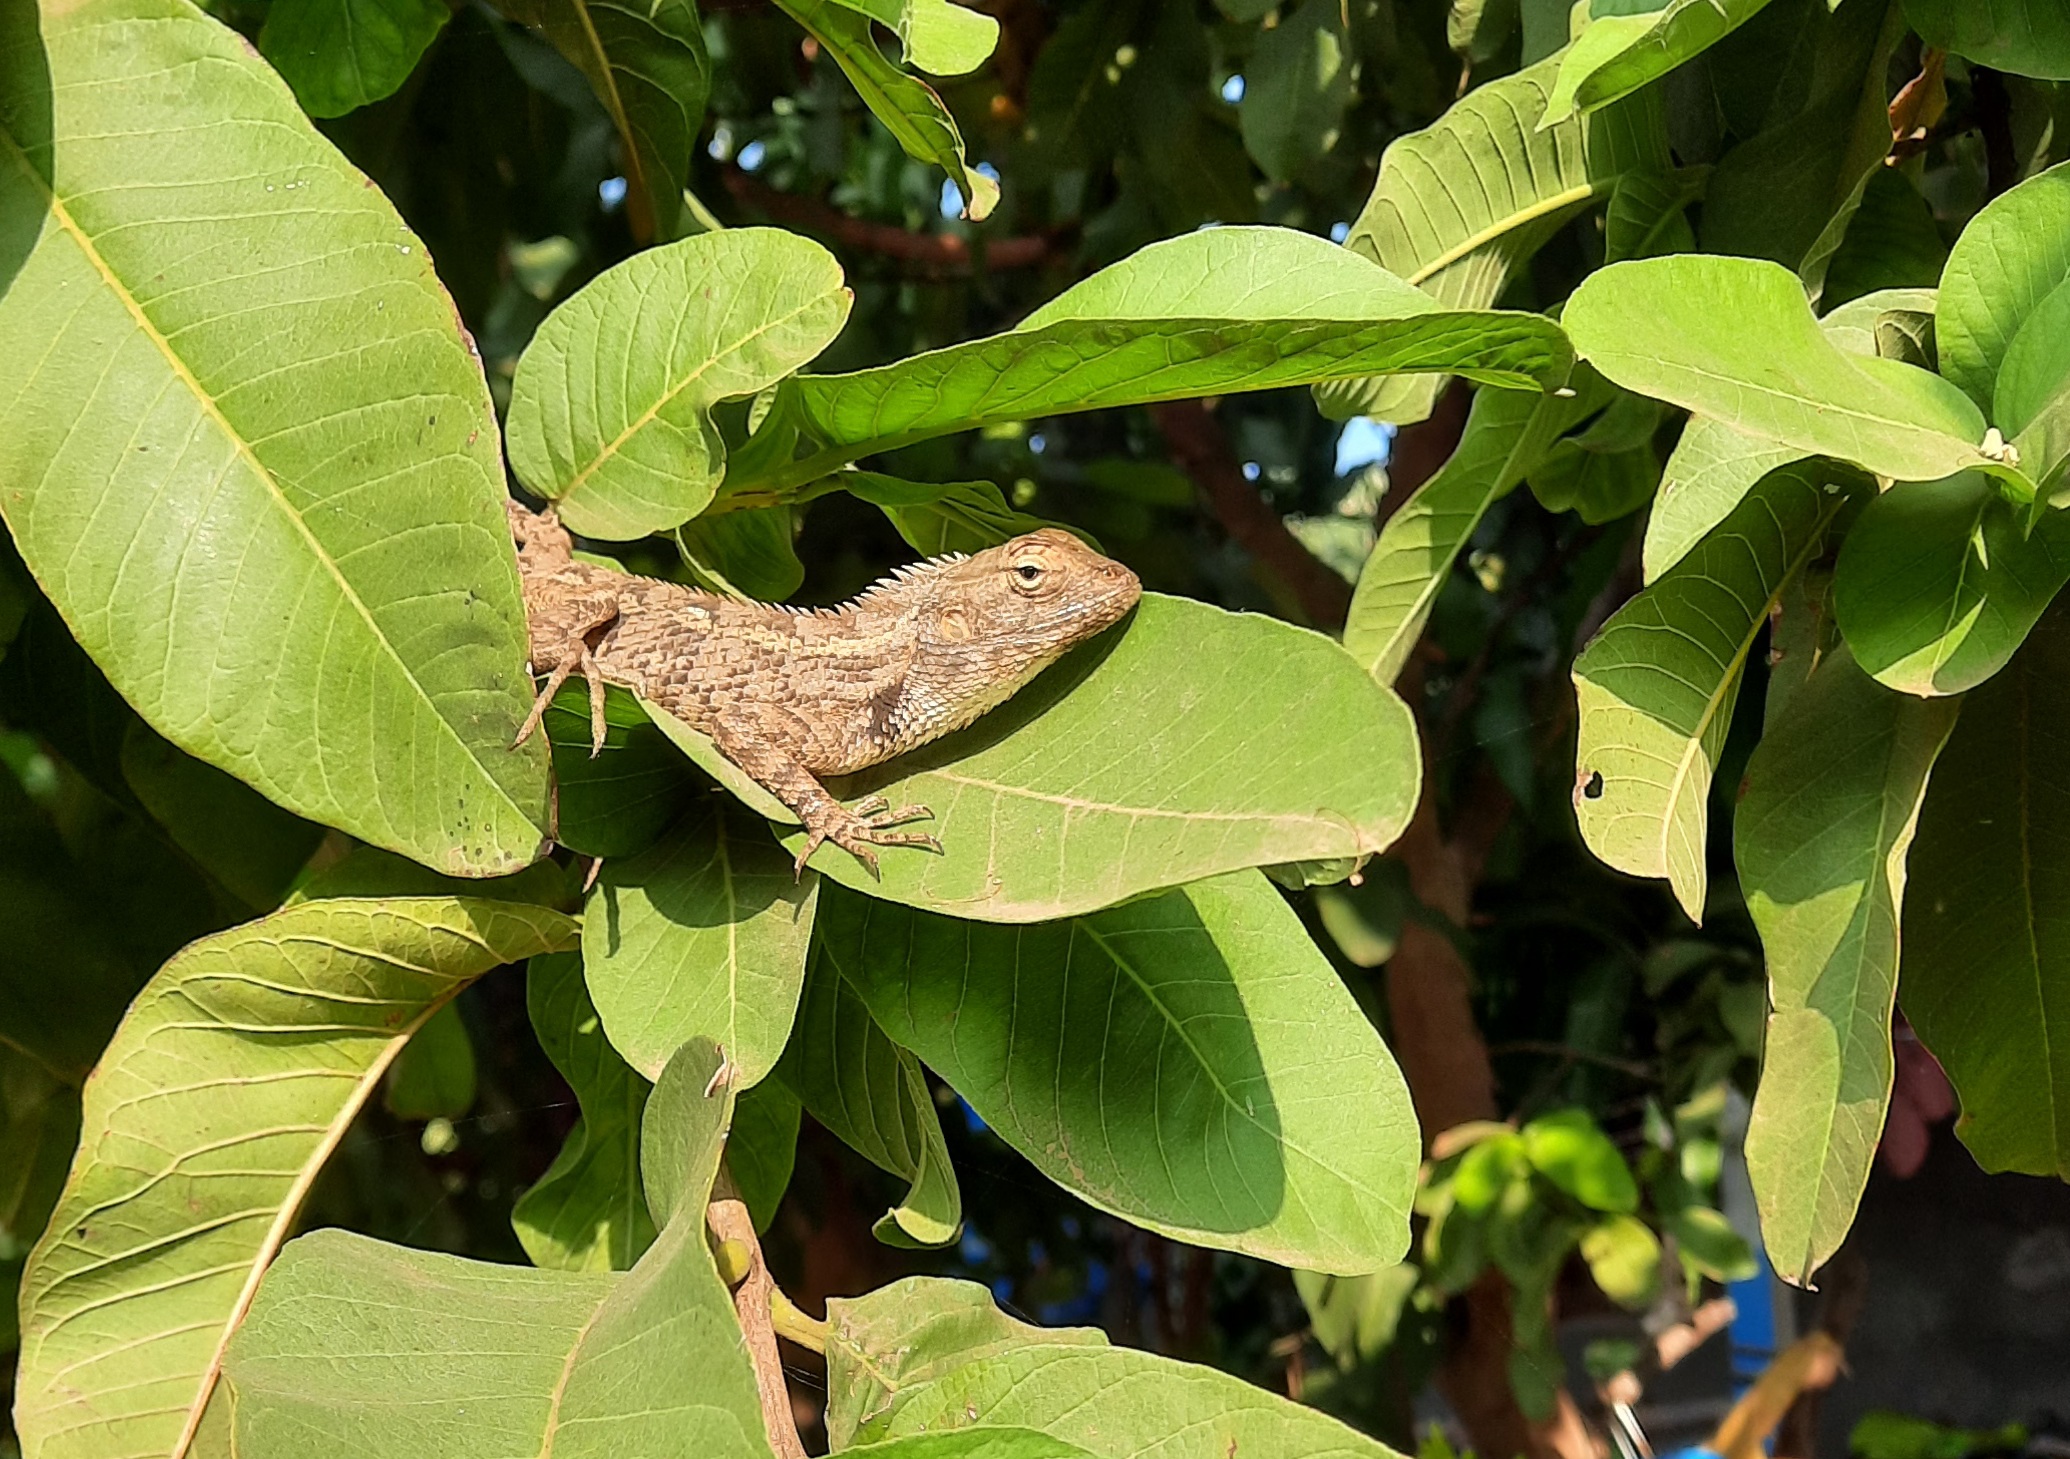 Lizard on plant leaf